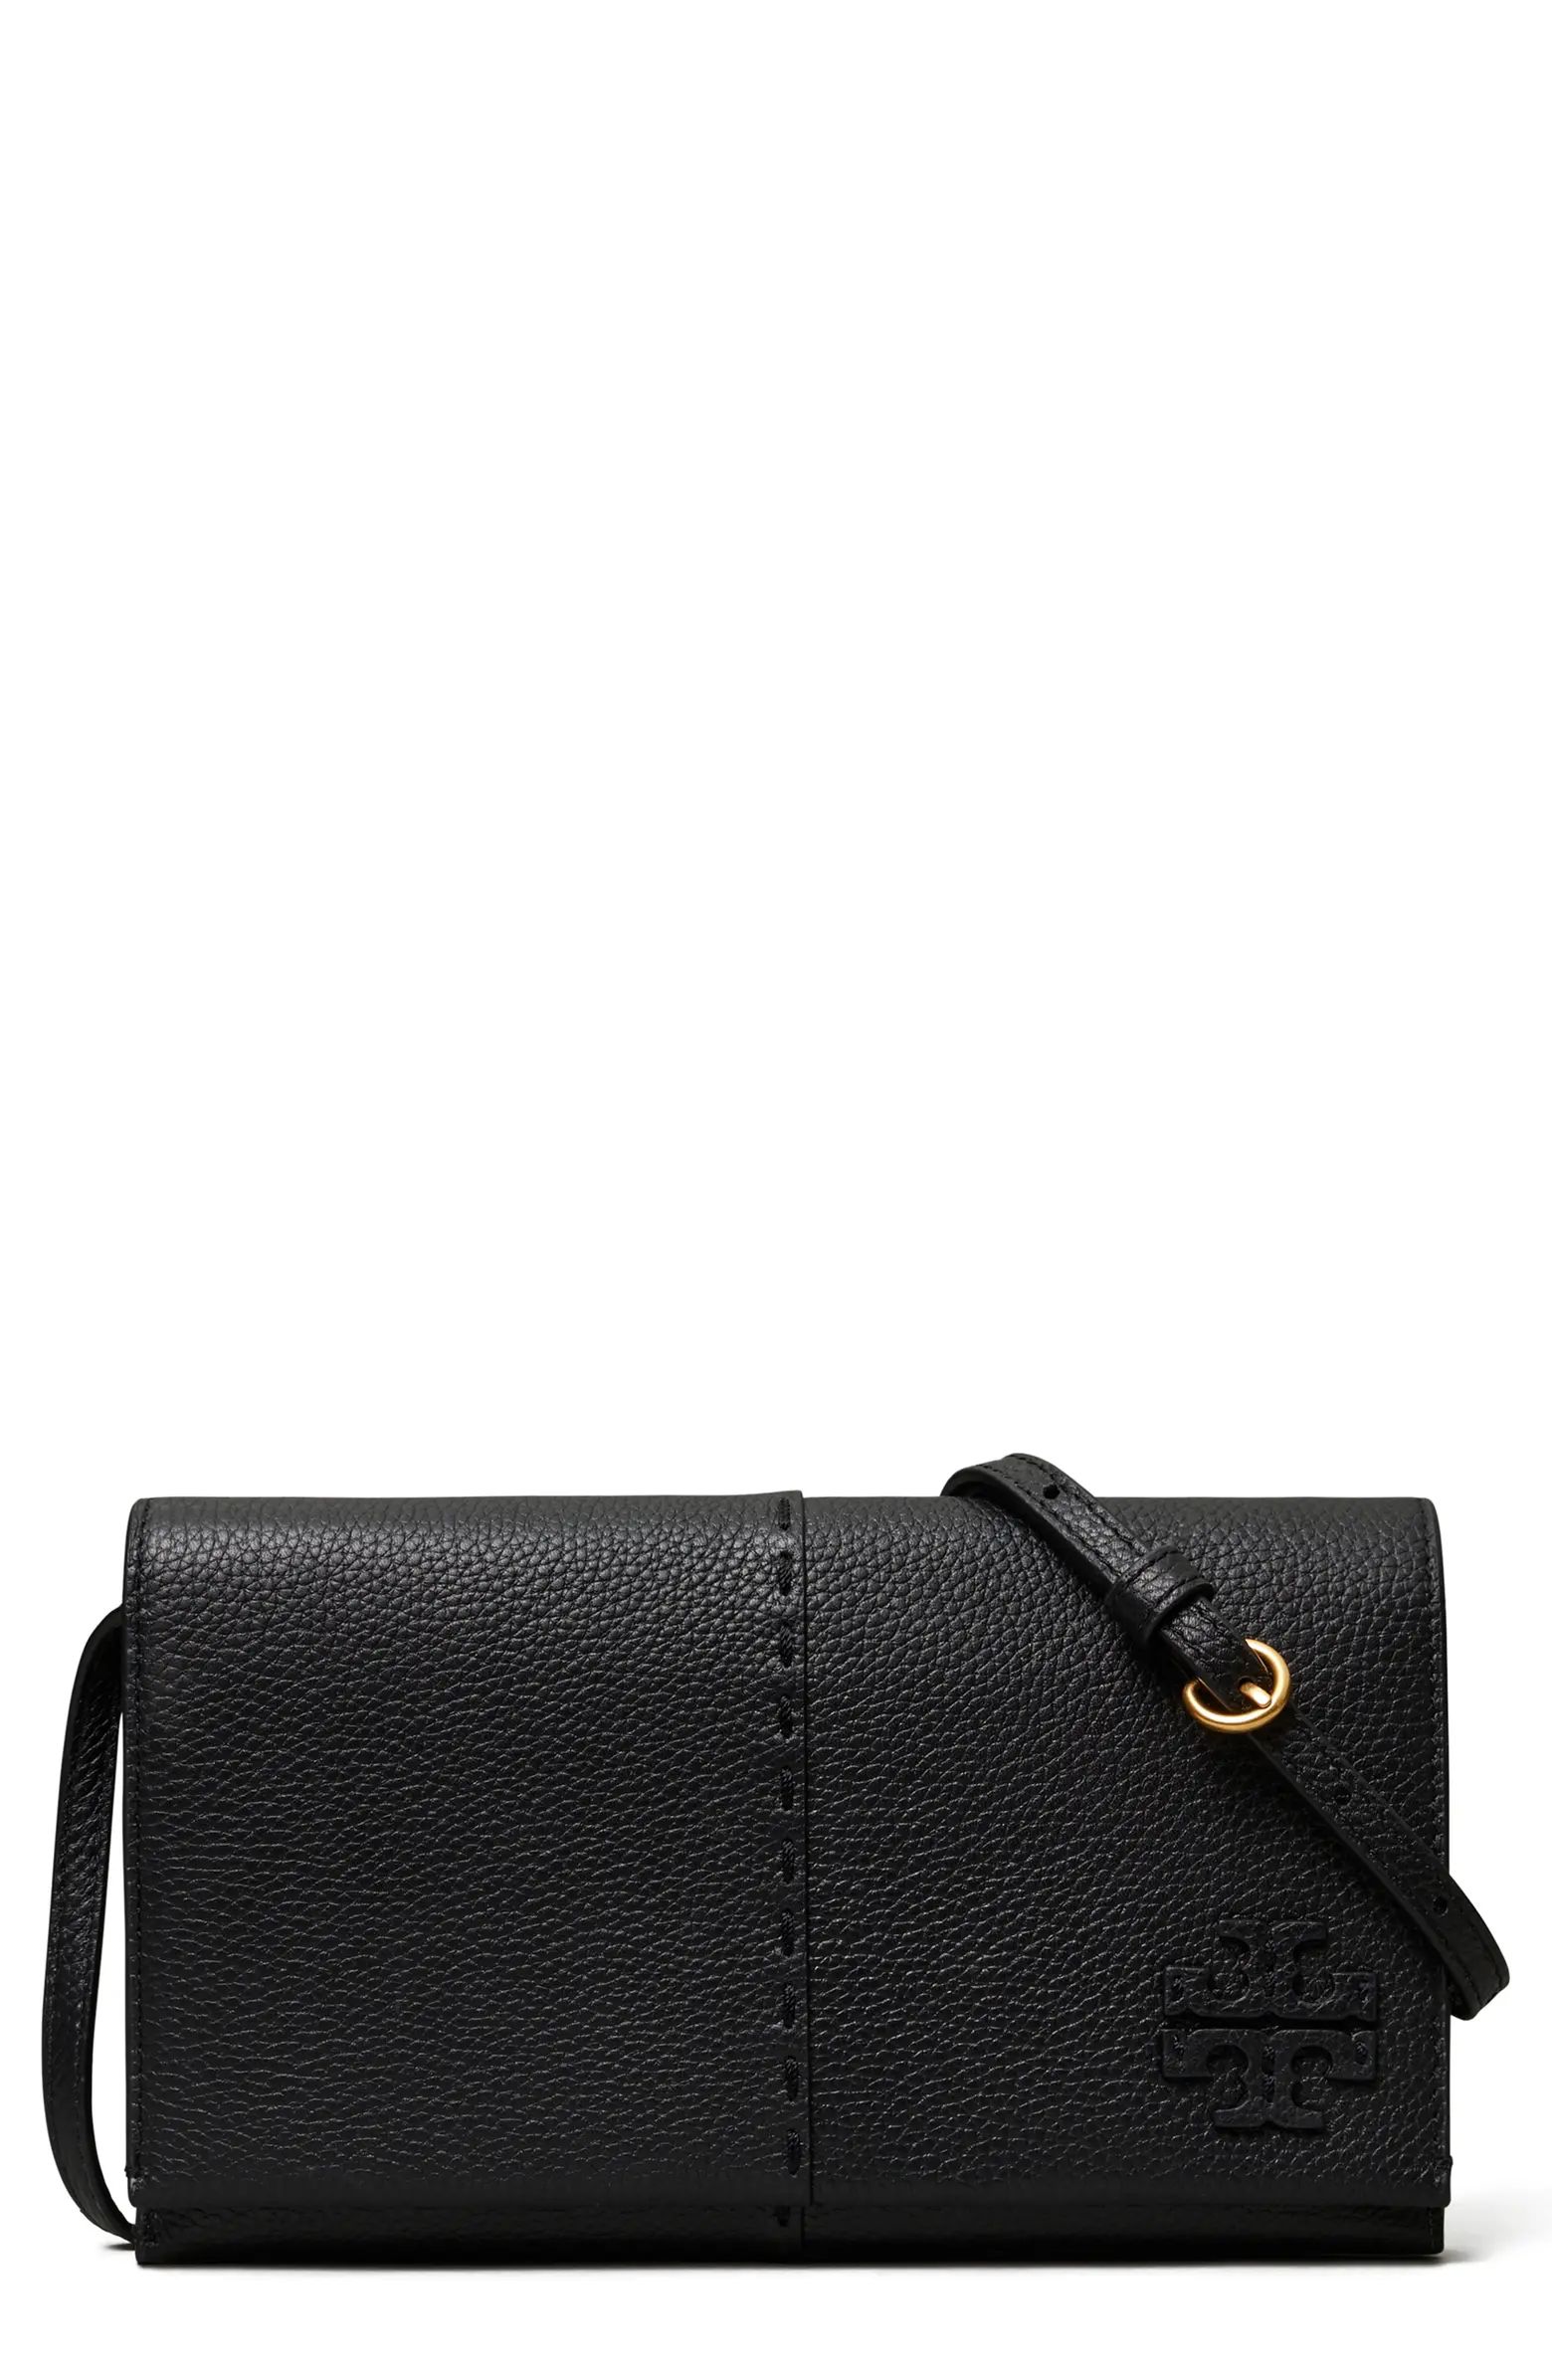 McGraw Leather Wallet Crossbody | Nordstrom